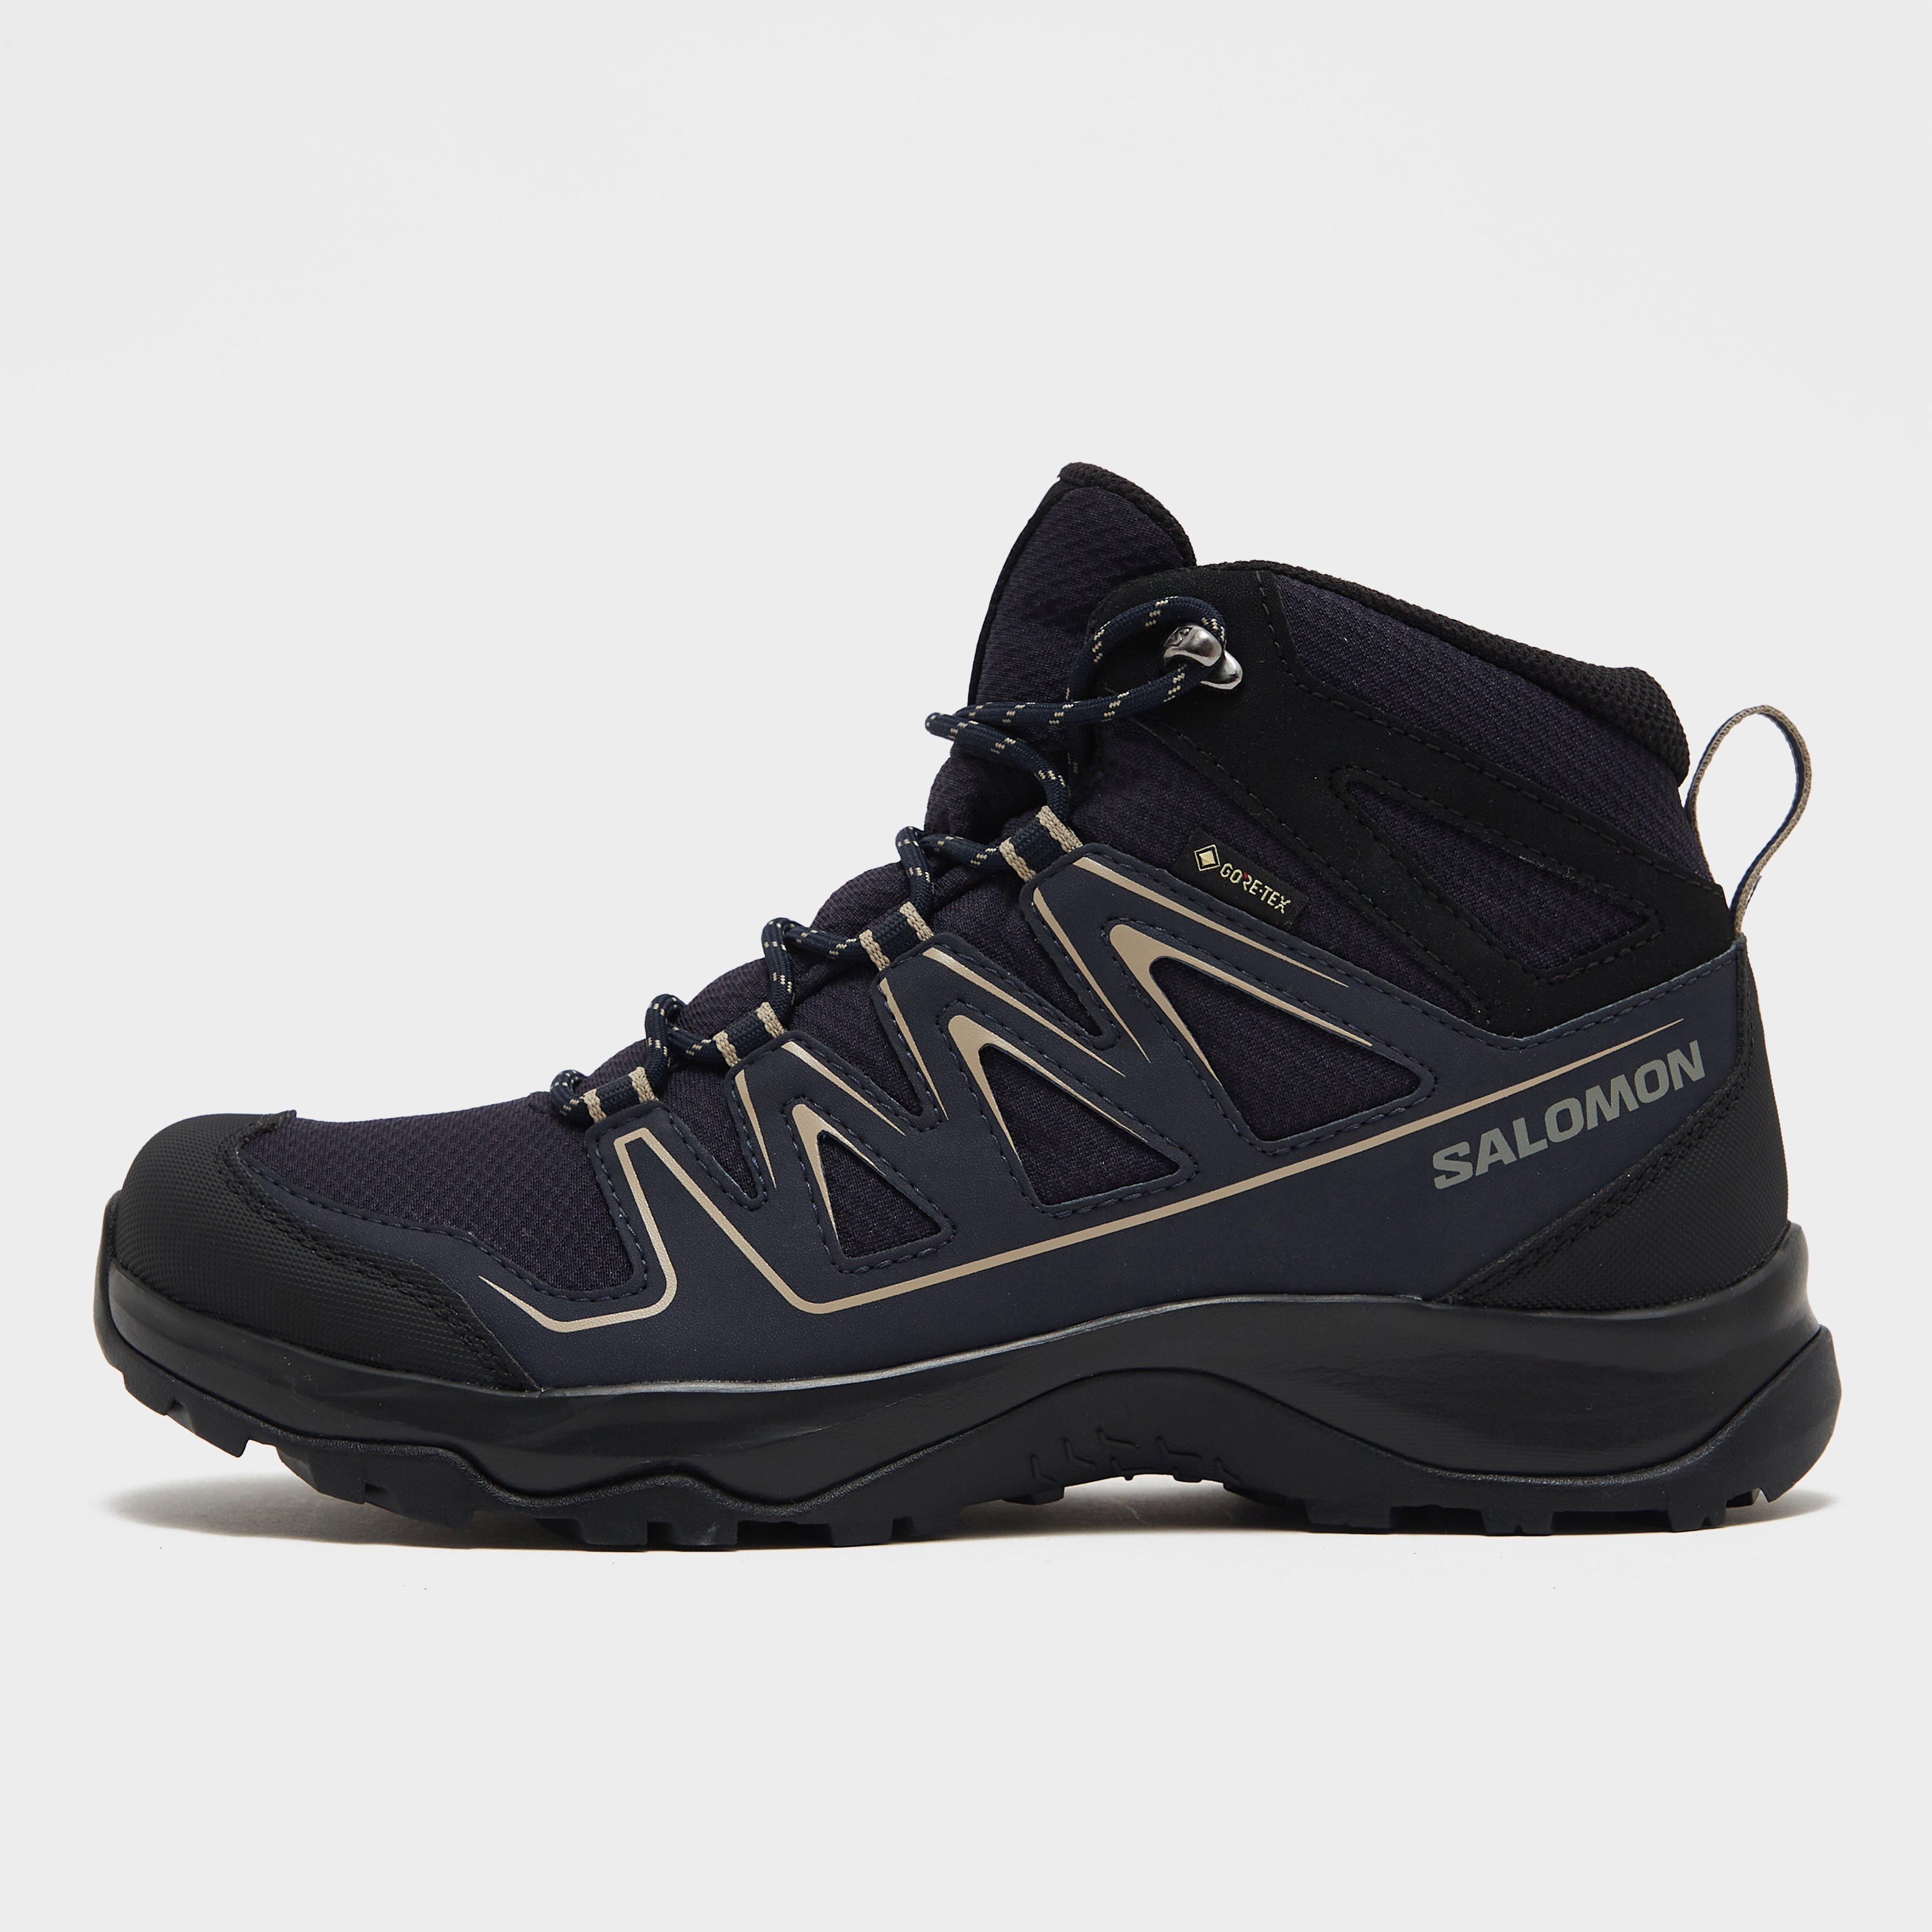 Salomon Men's Onis Mid GORE-TEX Hiking Boots, Grey